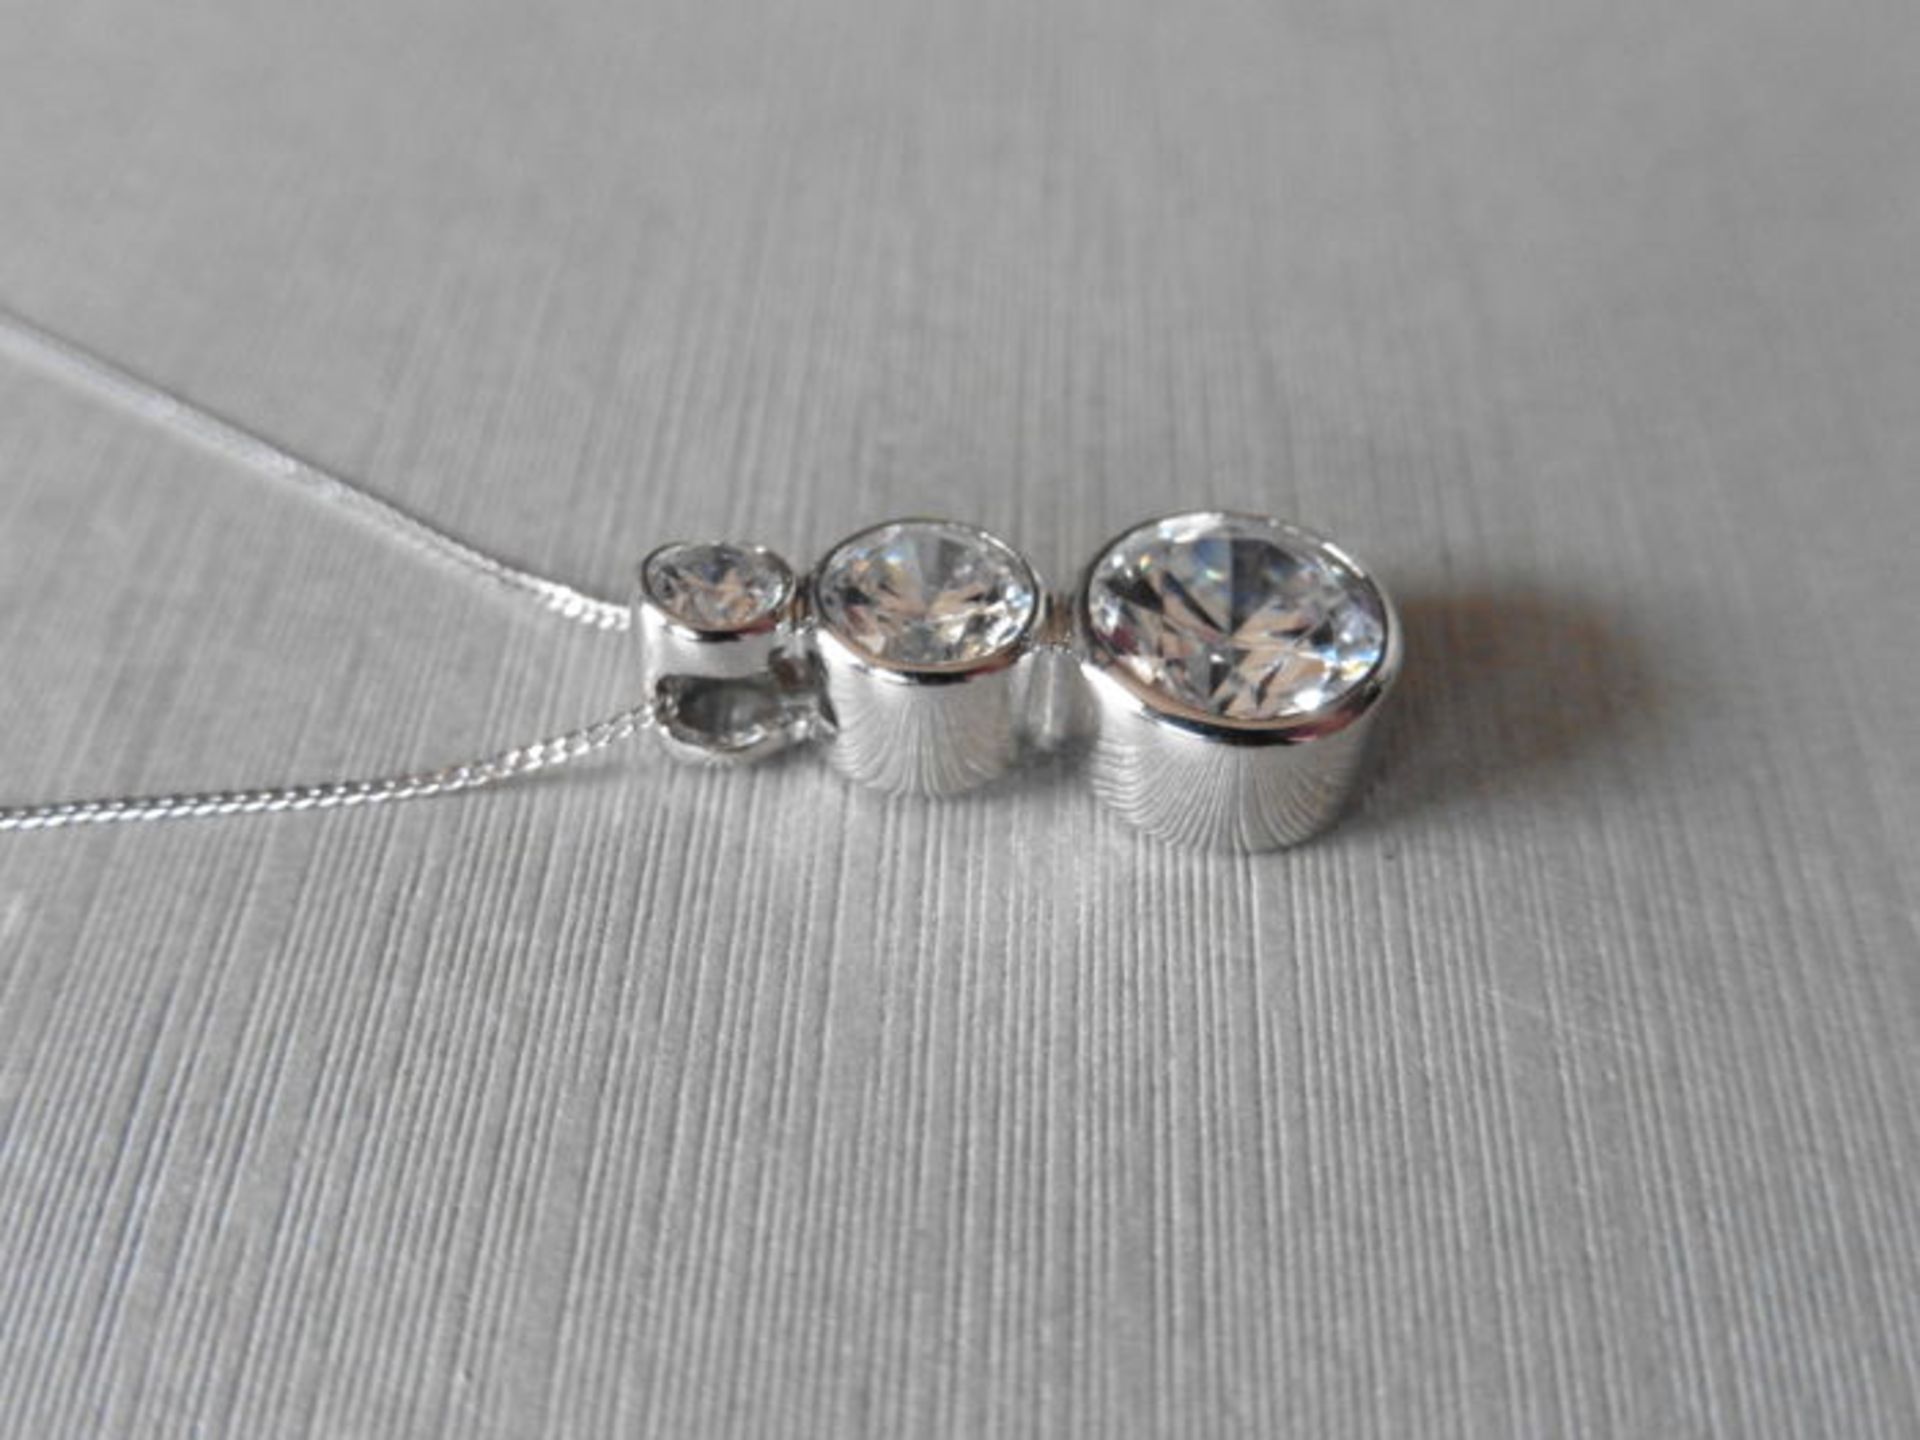 0.80ct trilogy diamond pendant set in platinum. 3 graduated brilliant cut diamonds, I/J colour, - Image 2 of 3